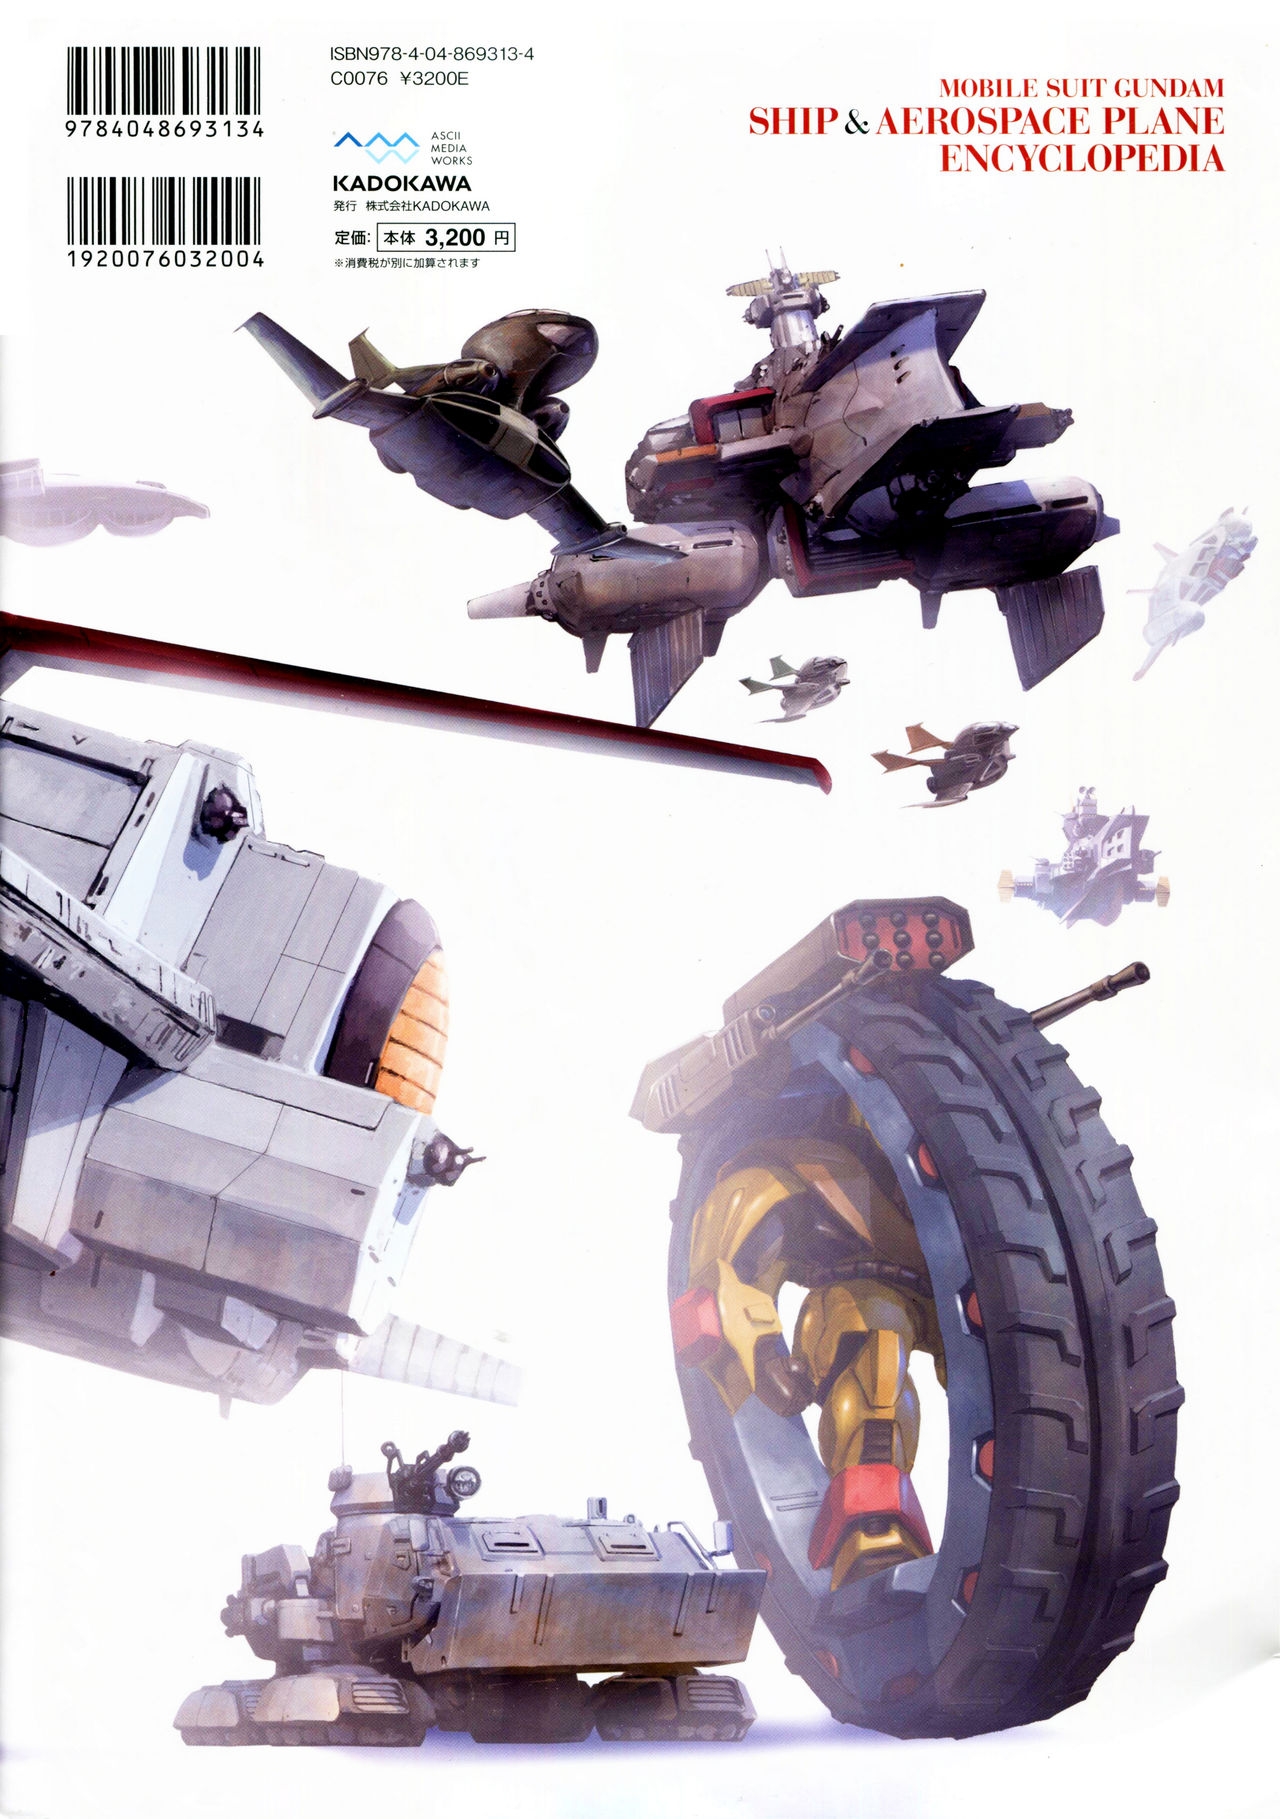 Mobile Suit Gundam - Ship & Aerospace Plane Encyclopedia - Revised Edition 1